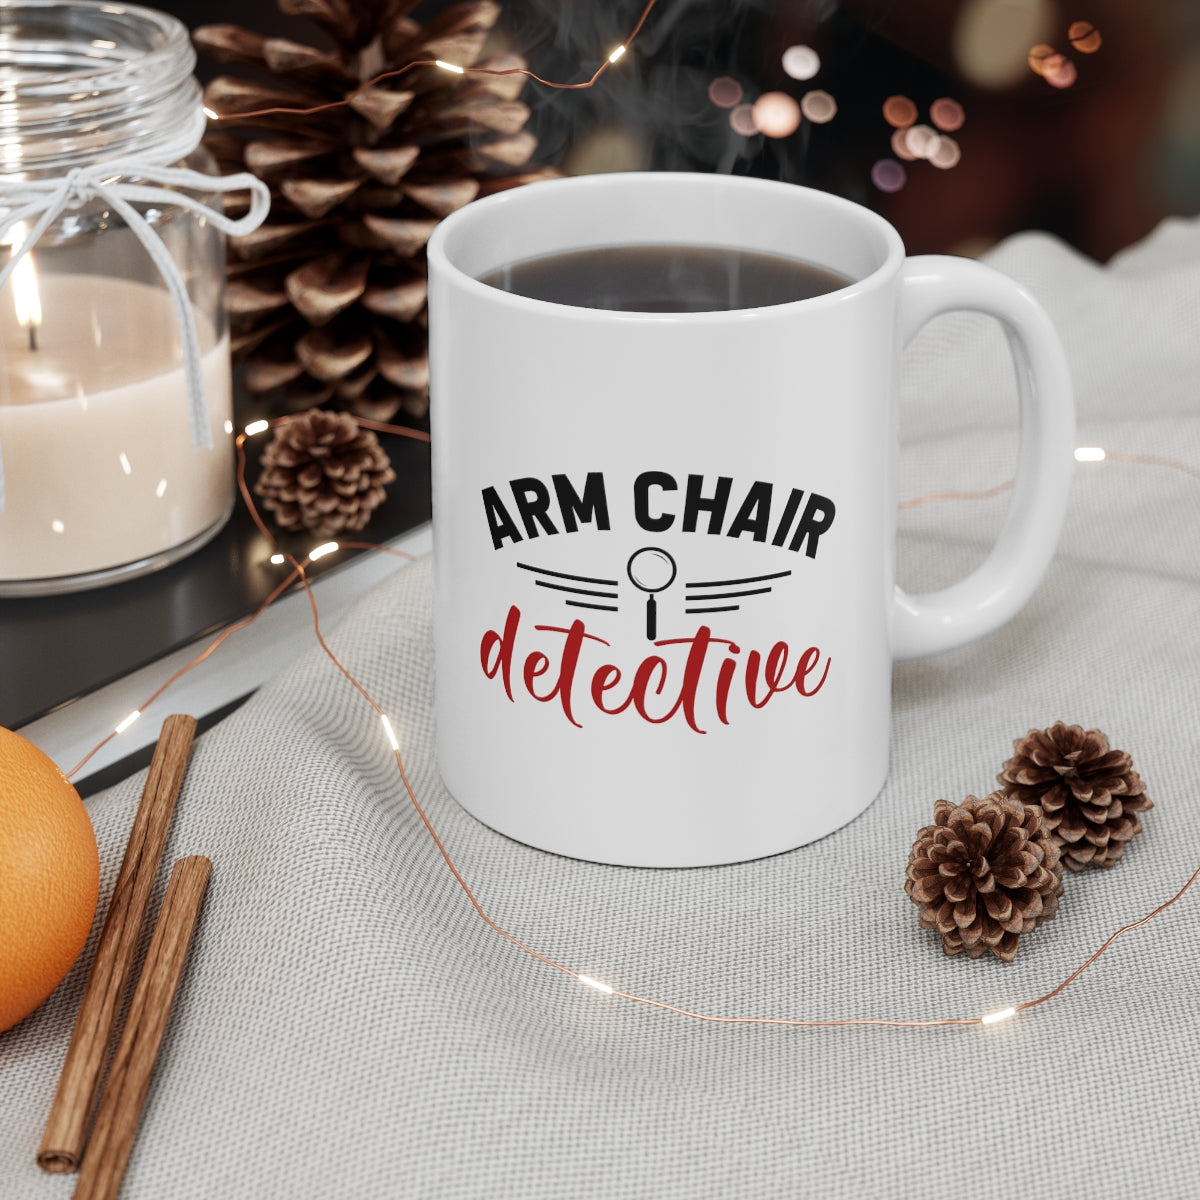 Arm Chair Detective | True Crime Shows Coffee Mugs